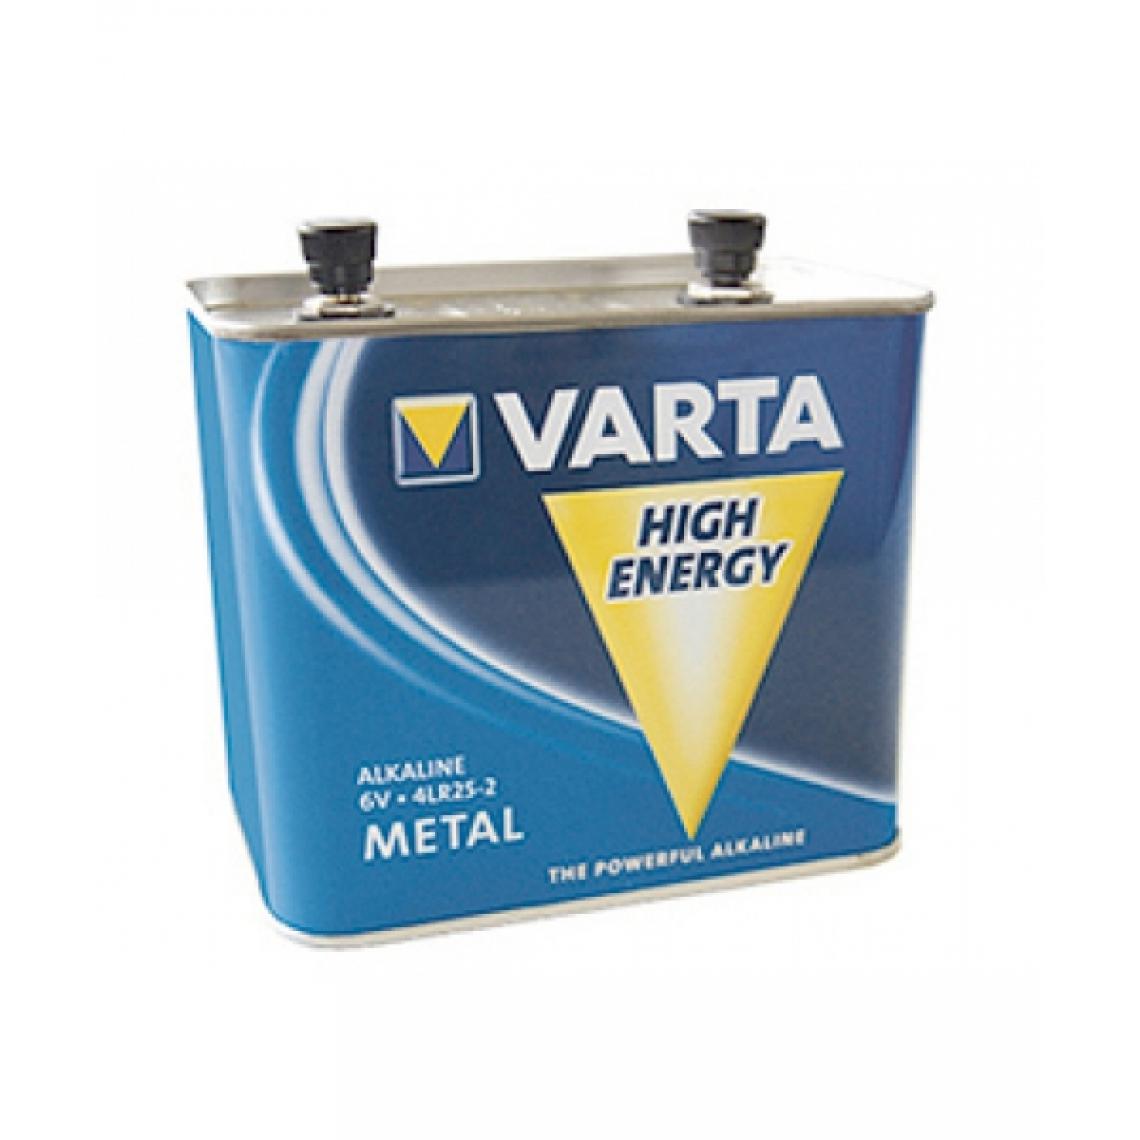 Varta - Pile alcaline métal 6v 4R25.2 VARTA - 435101111 - Piles rechargeables